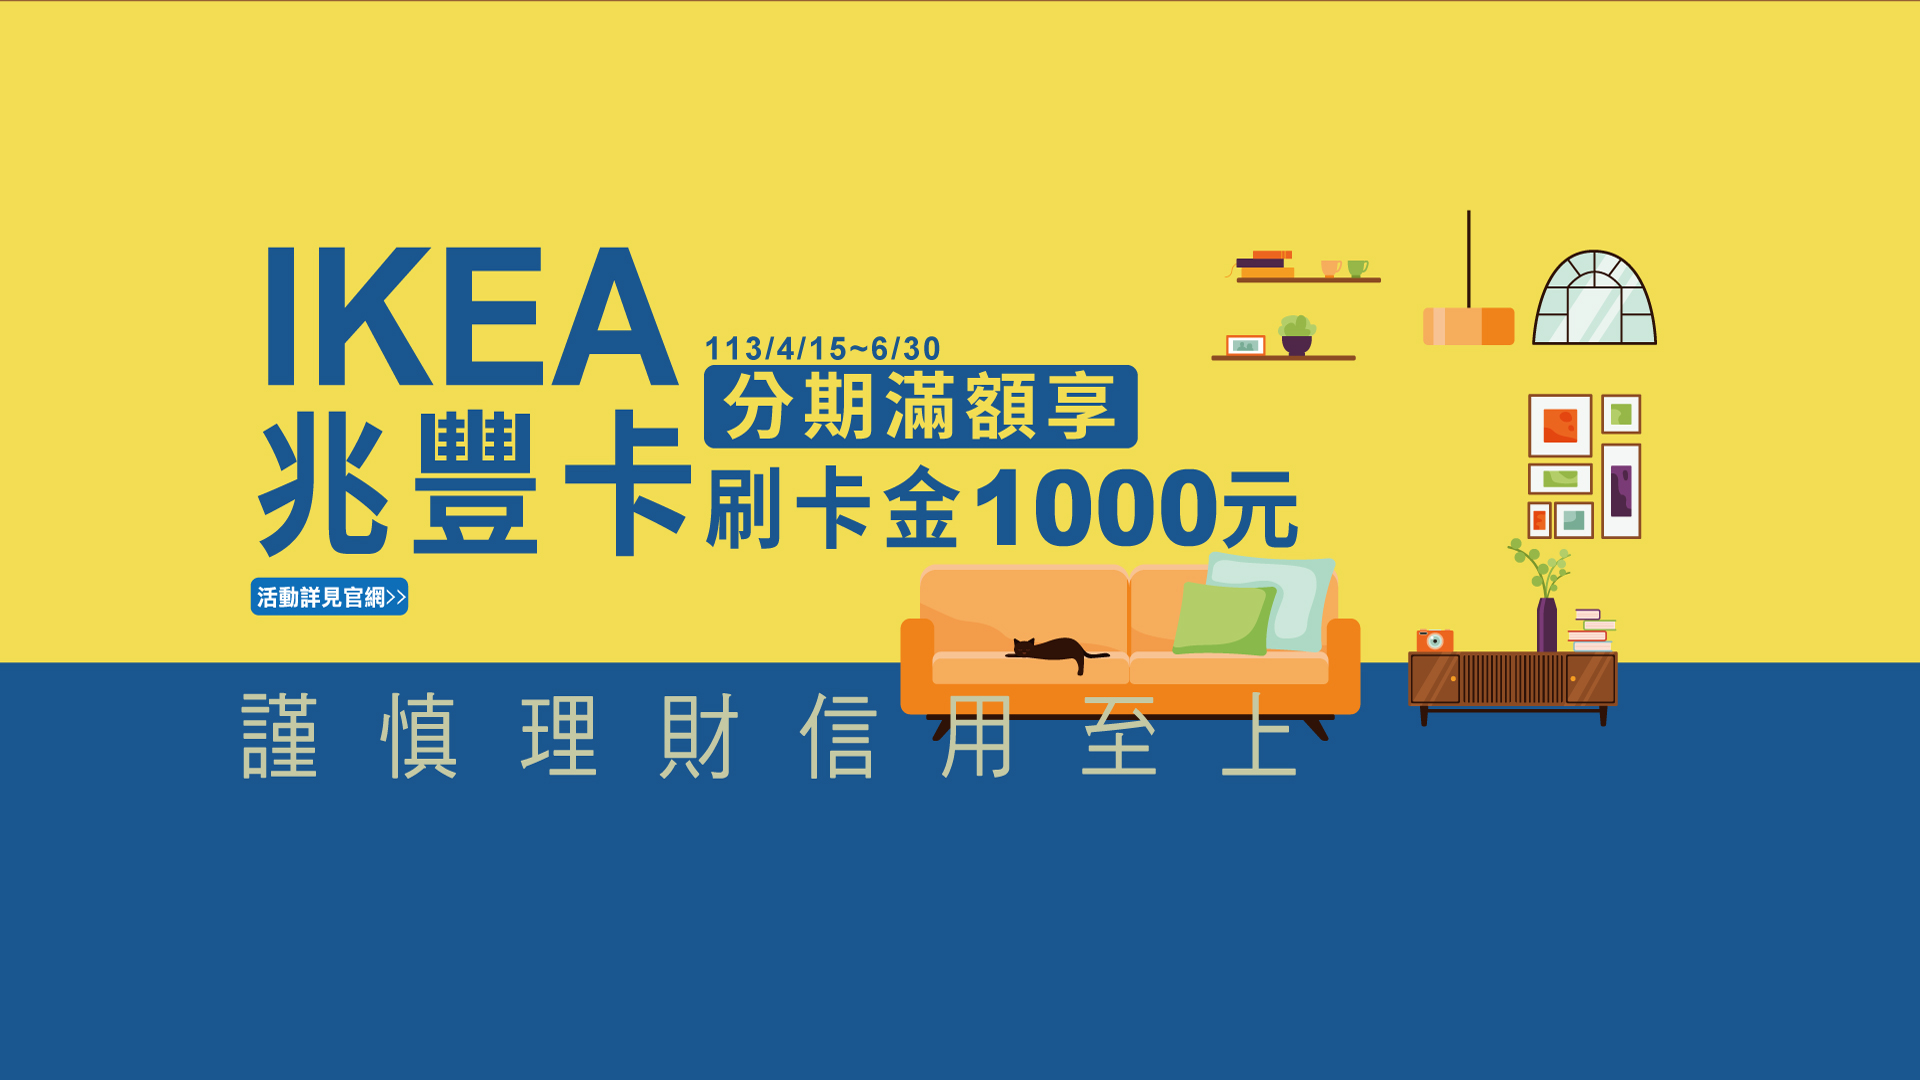 「IKEA 兆豐卡分期滿額享刷卡金1000元」Banner